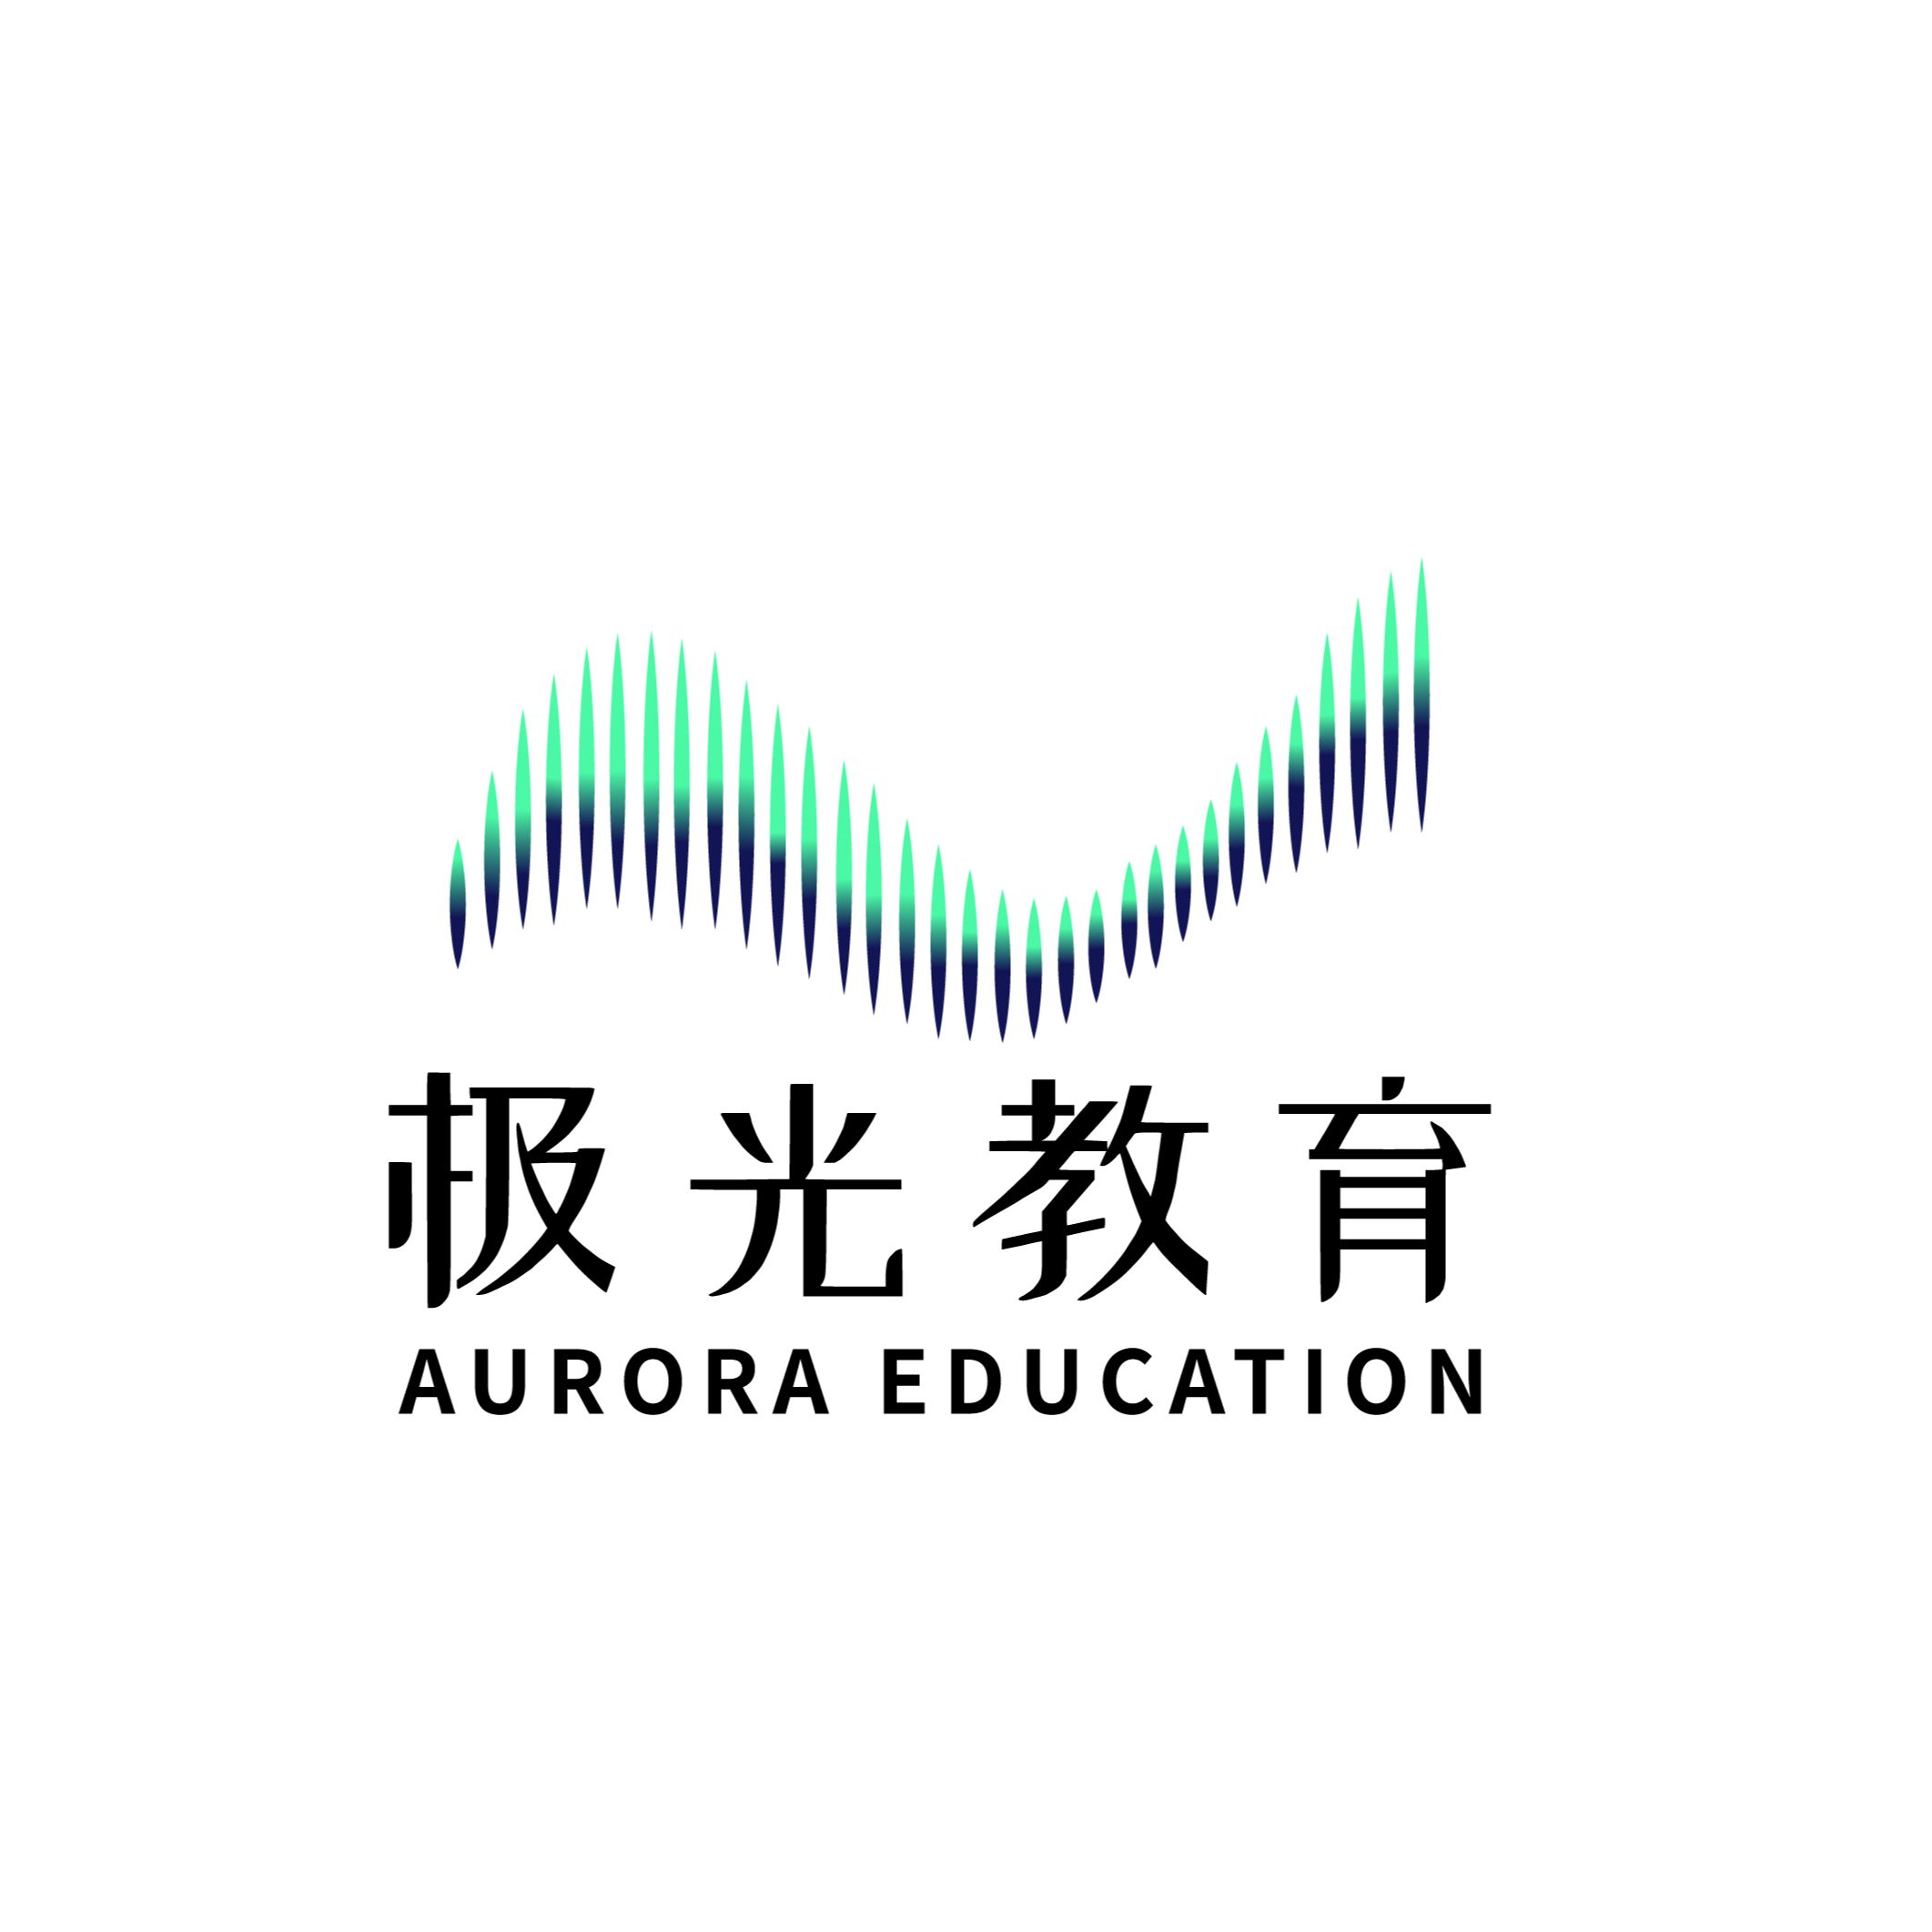 Aurora Education logo